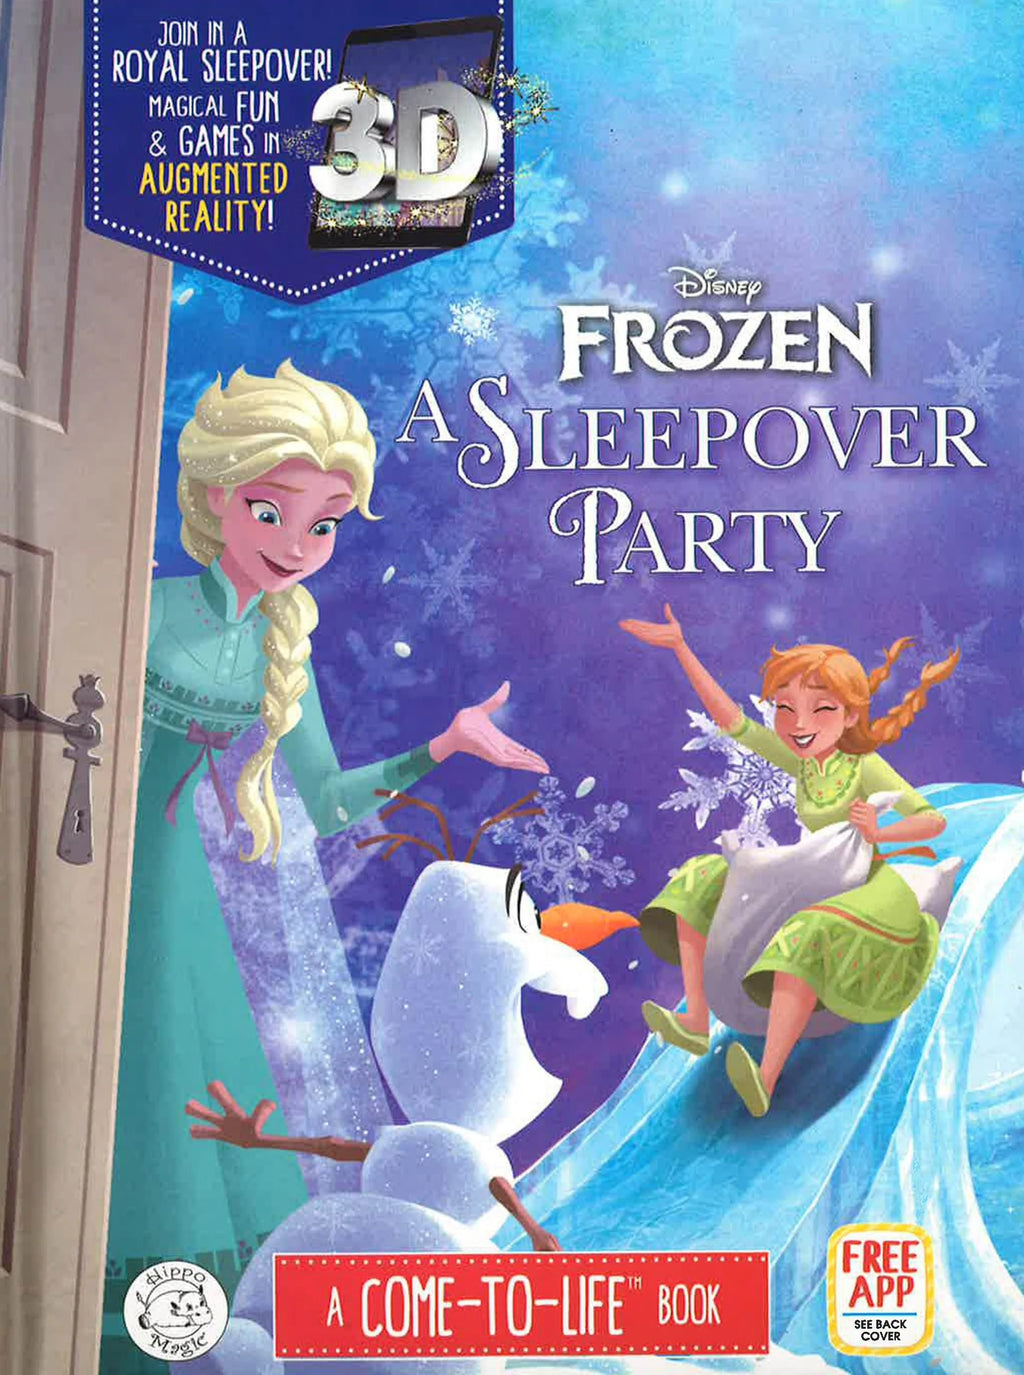 Come to Life Book: Frozen A Sleepover Party